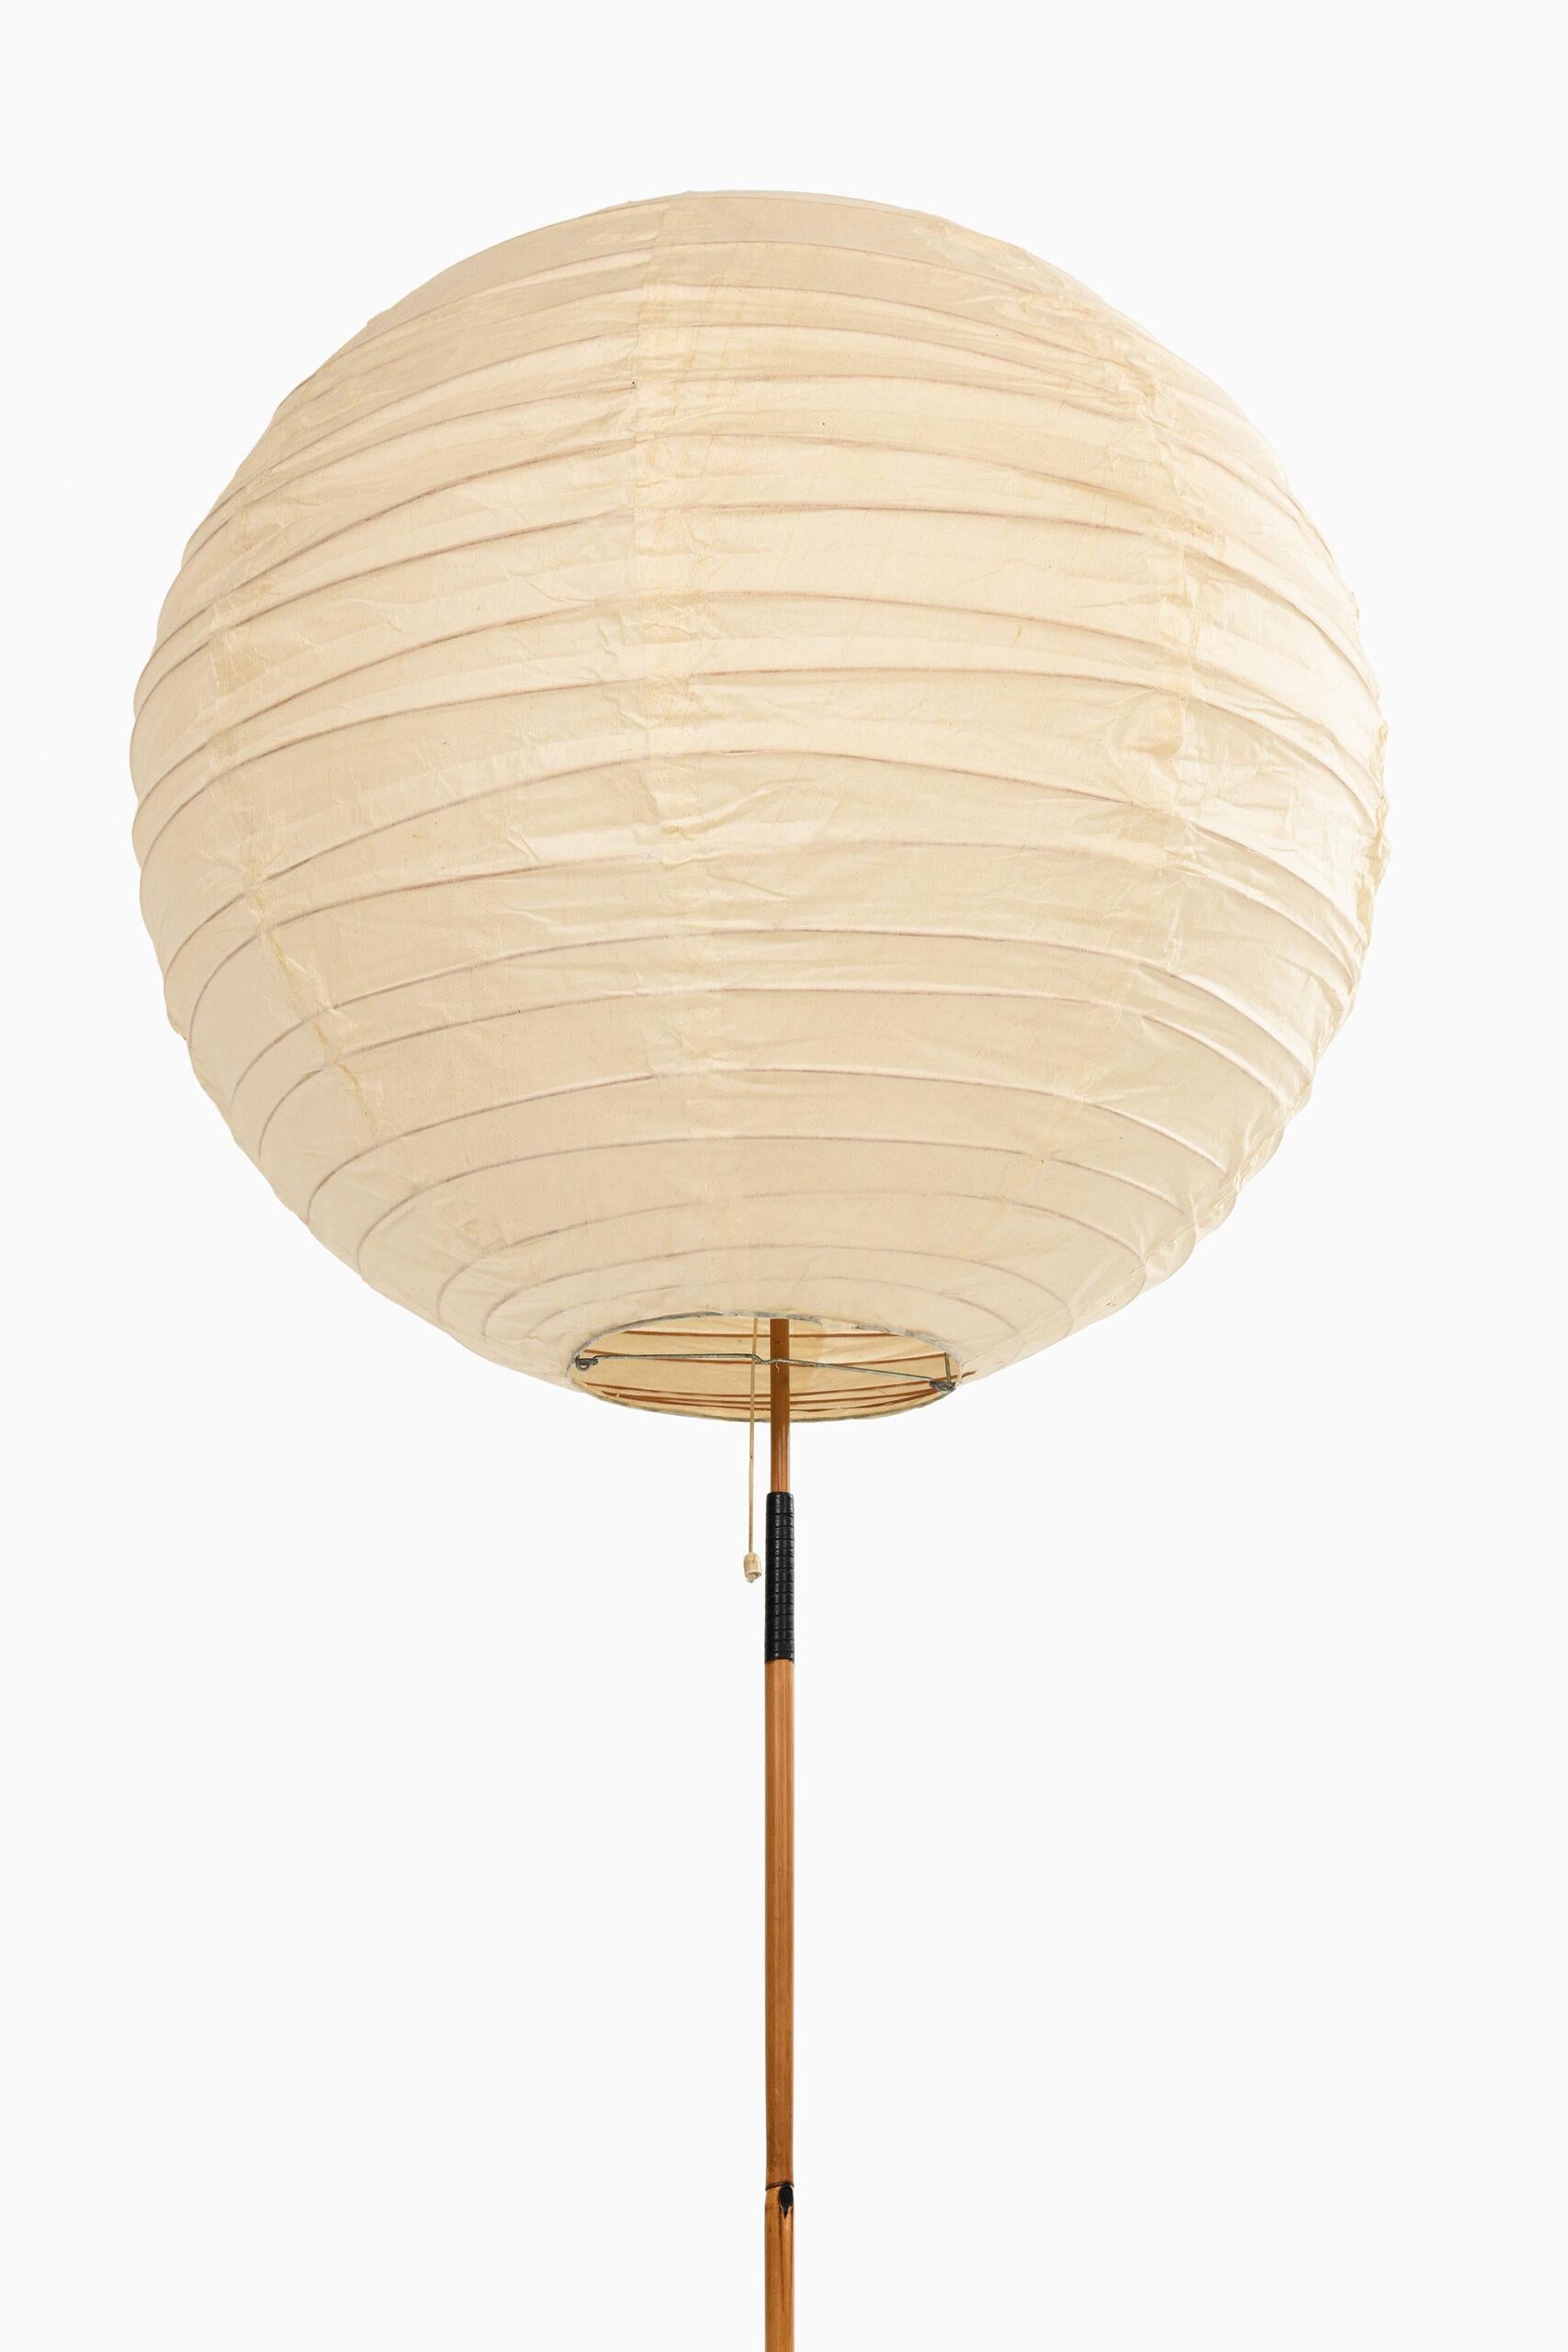 American Isamu Noguchi Floor Lamp Produced by Akari